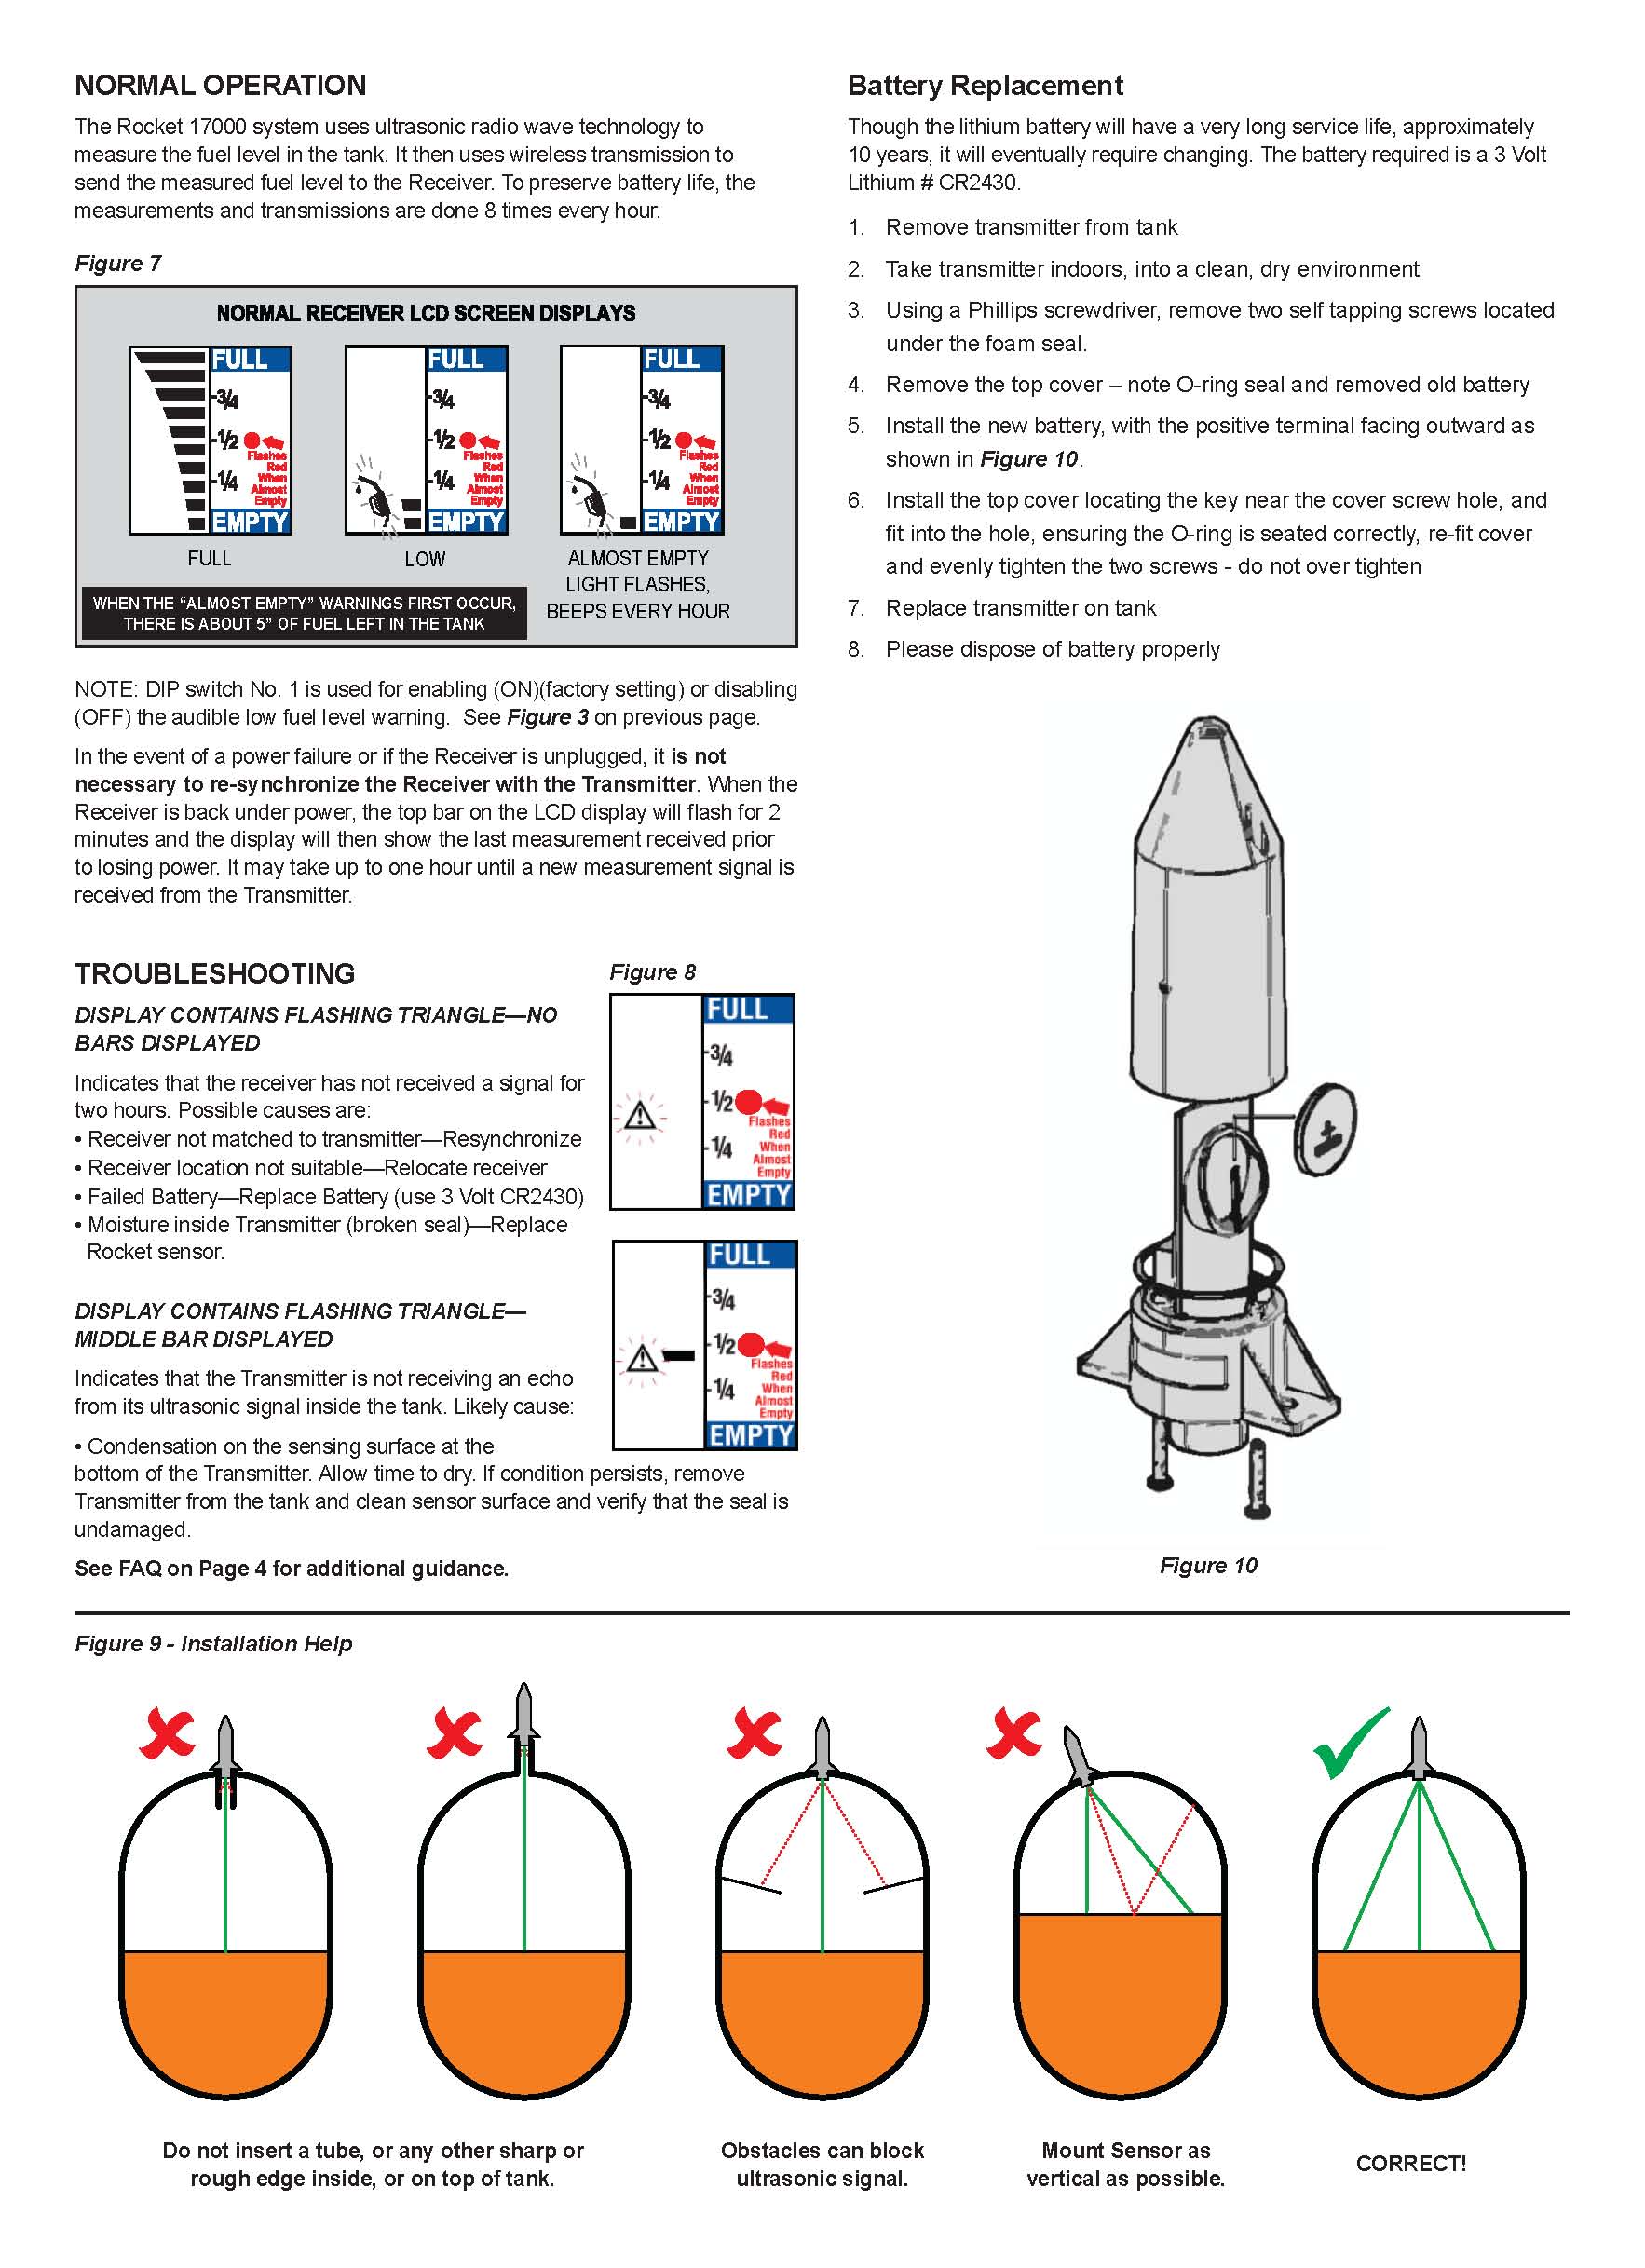 oem rocket instructions